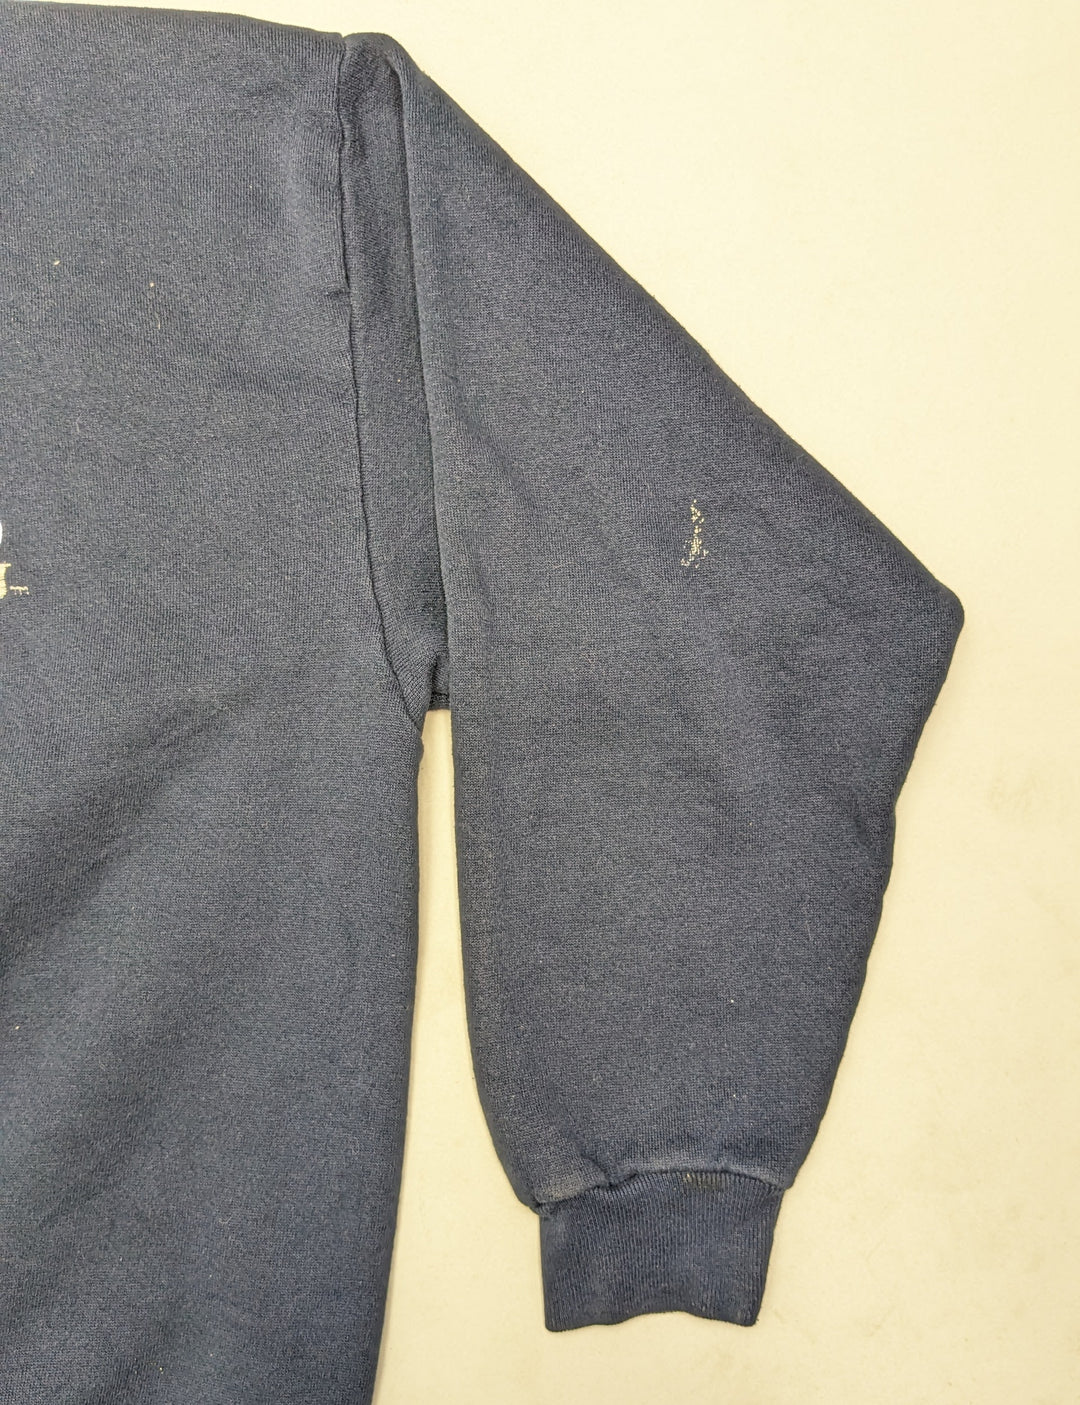 xBrigham Young Sweatshirt 1 pc 1 lb C0123214-05 - Raghouse